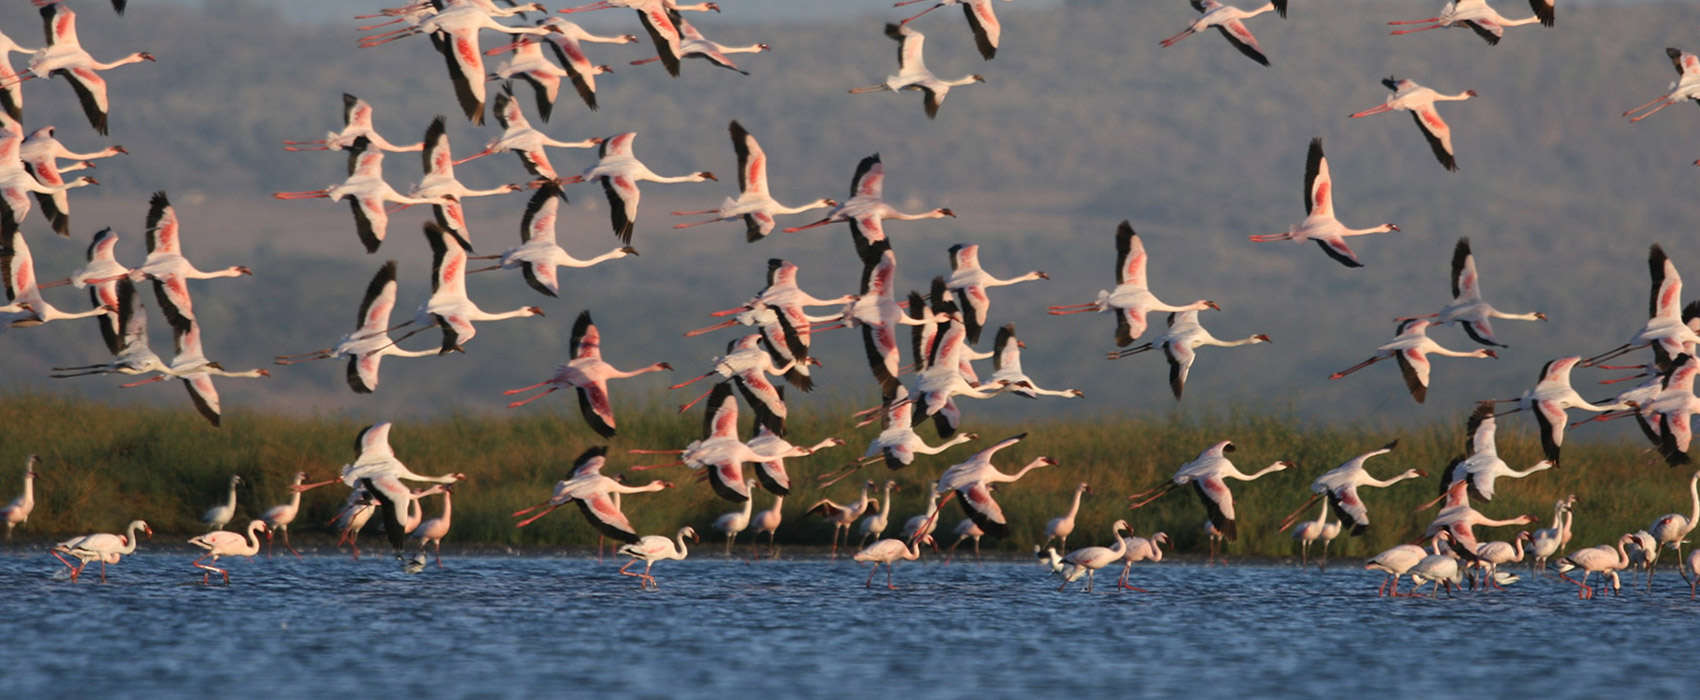 African Great Rift Valley Lakes Safari birds